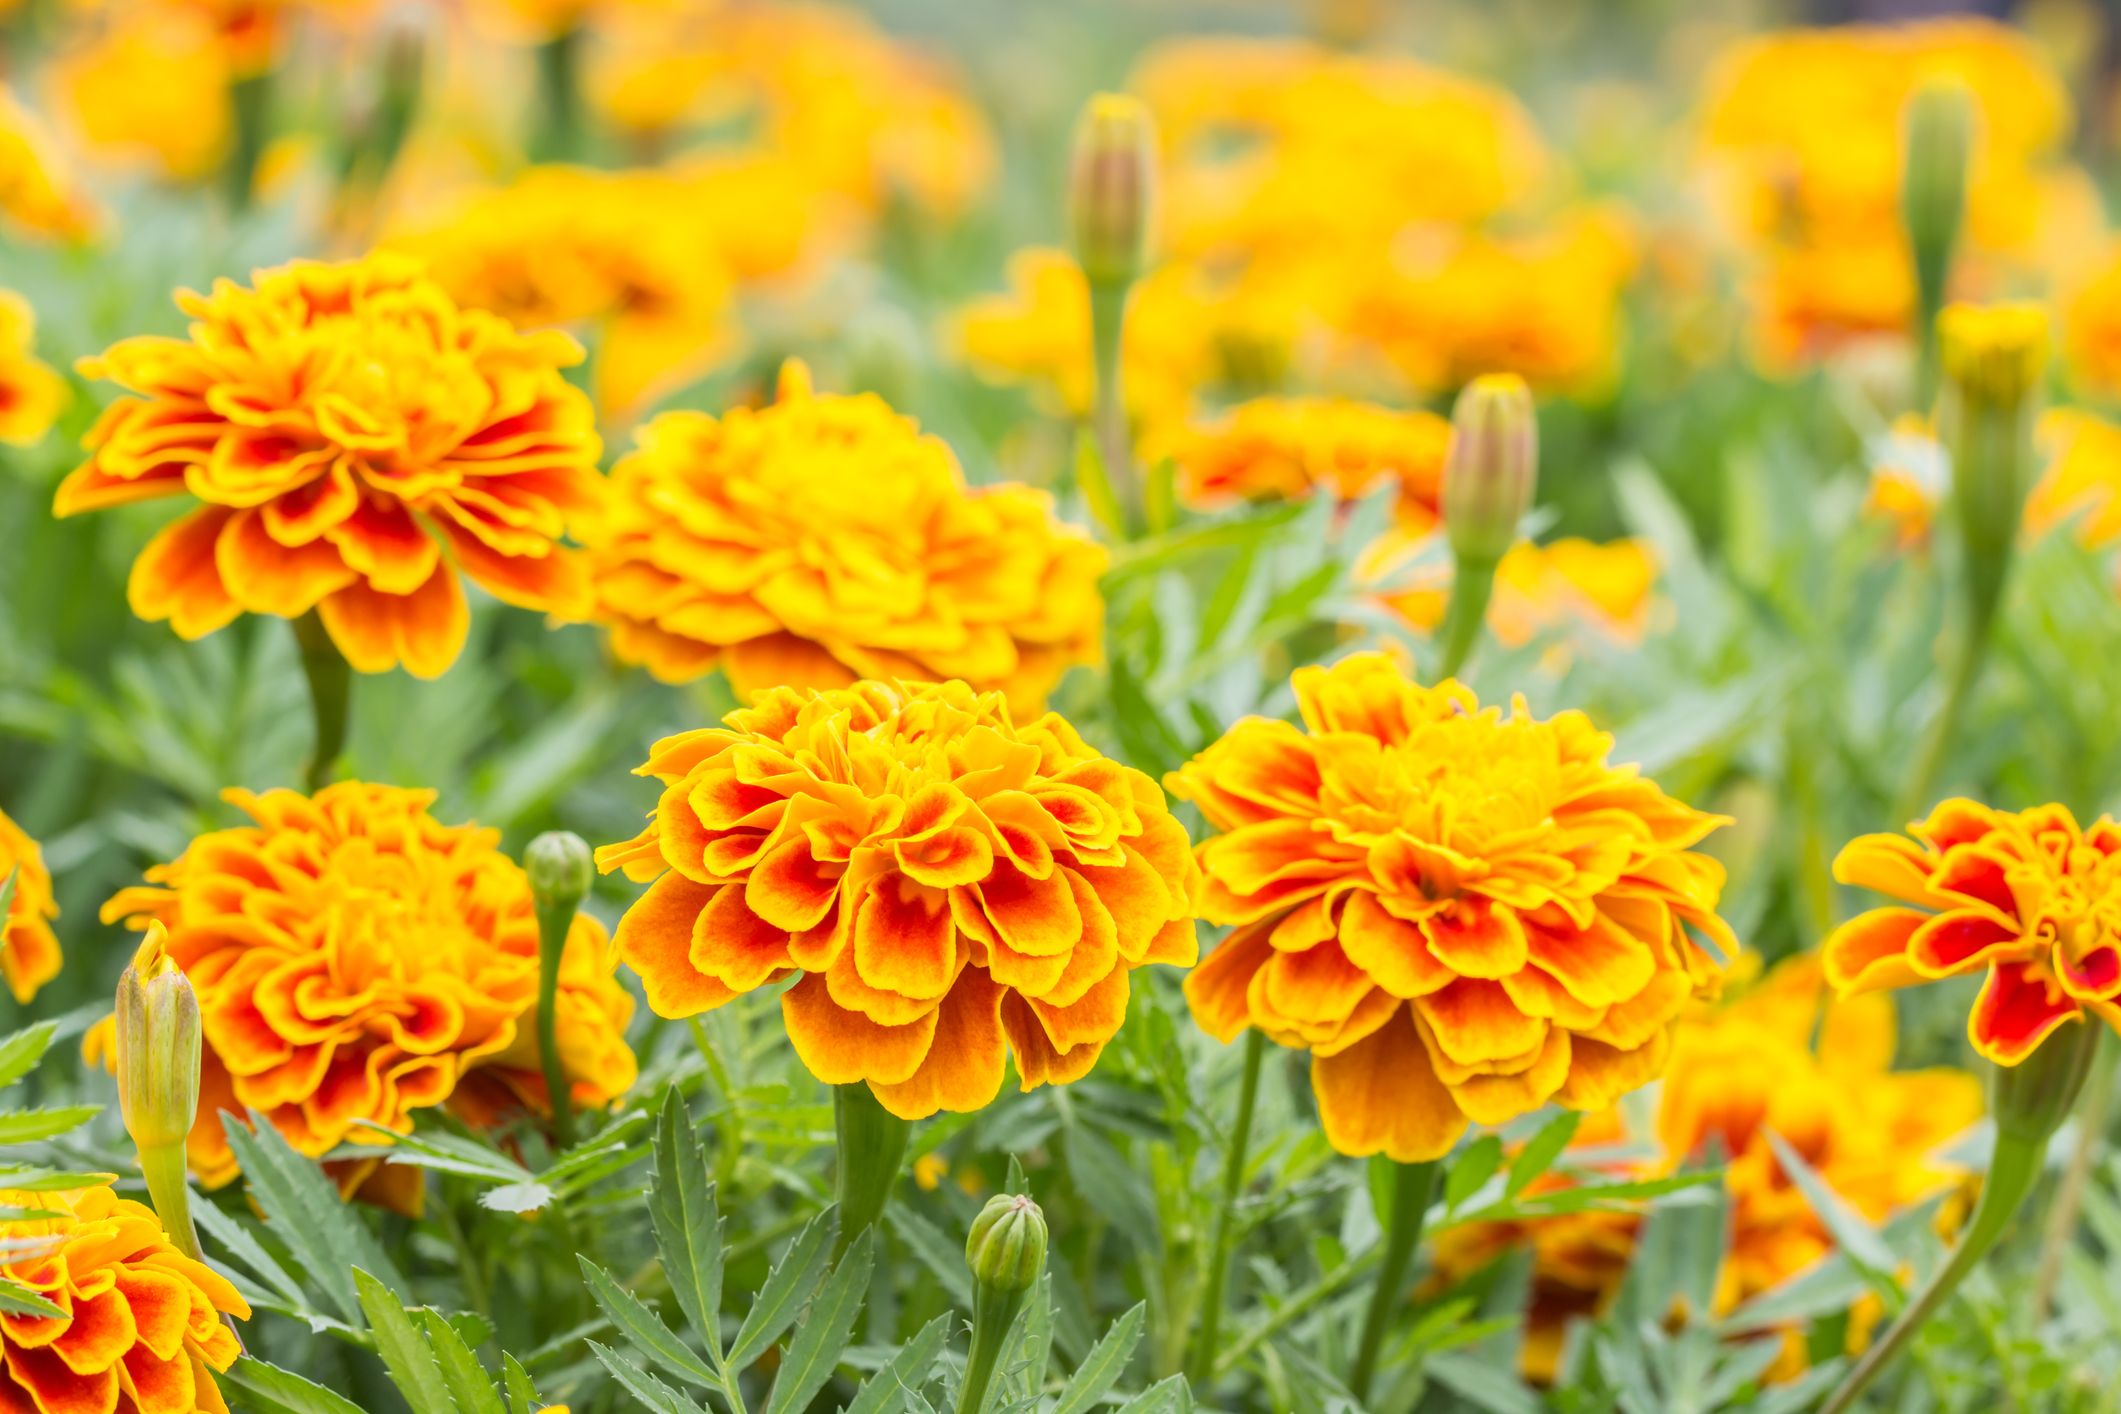 Image of French marigold plant